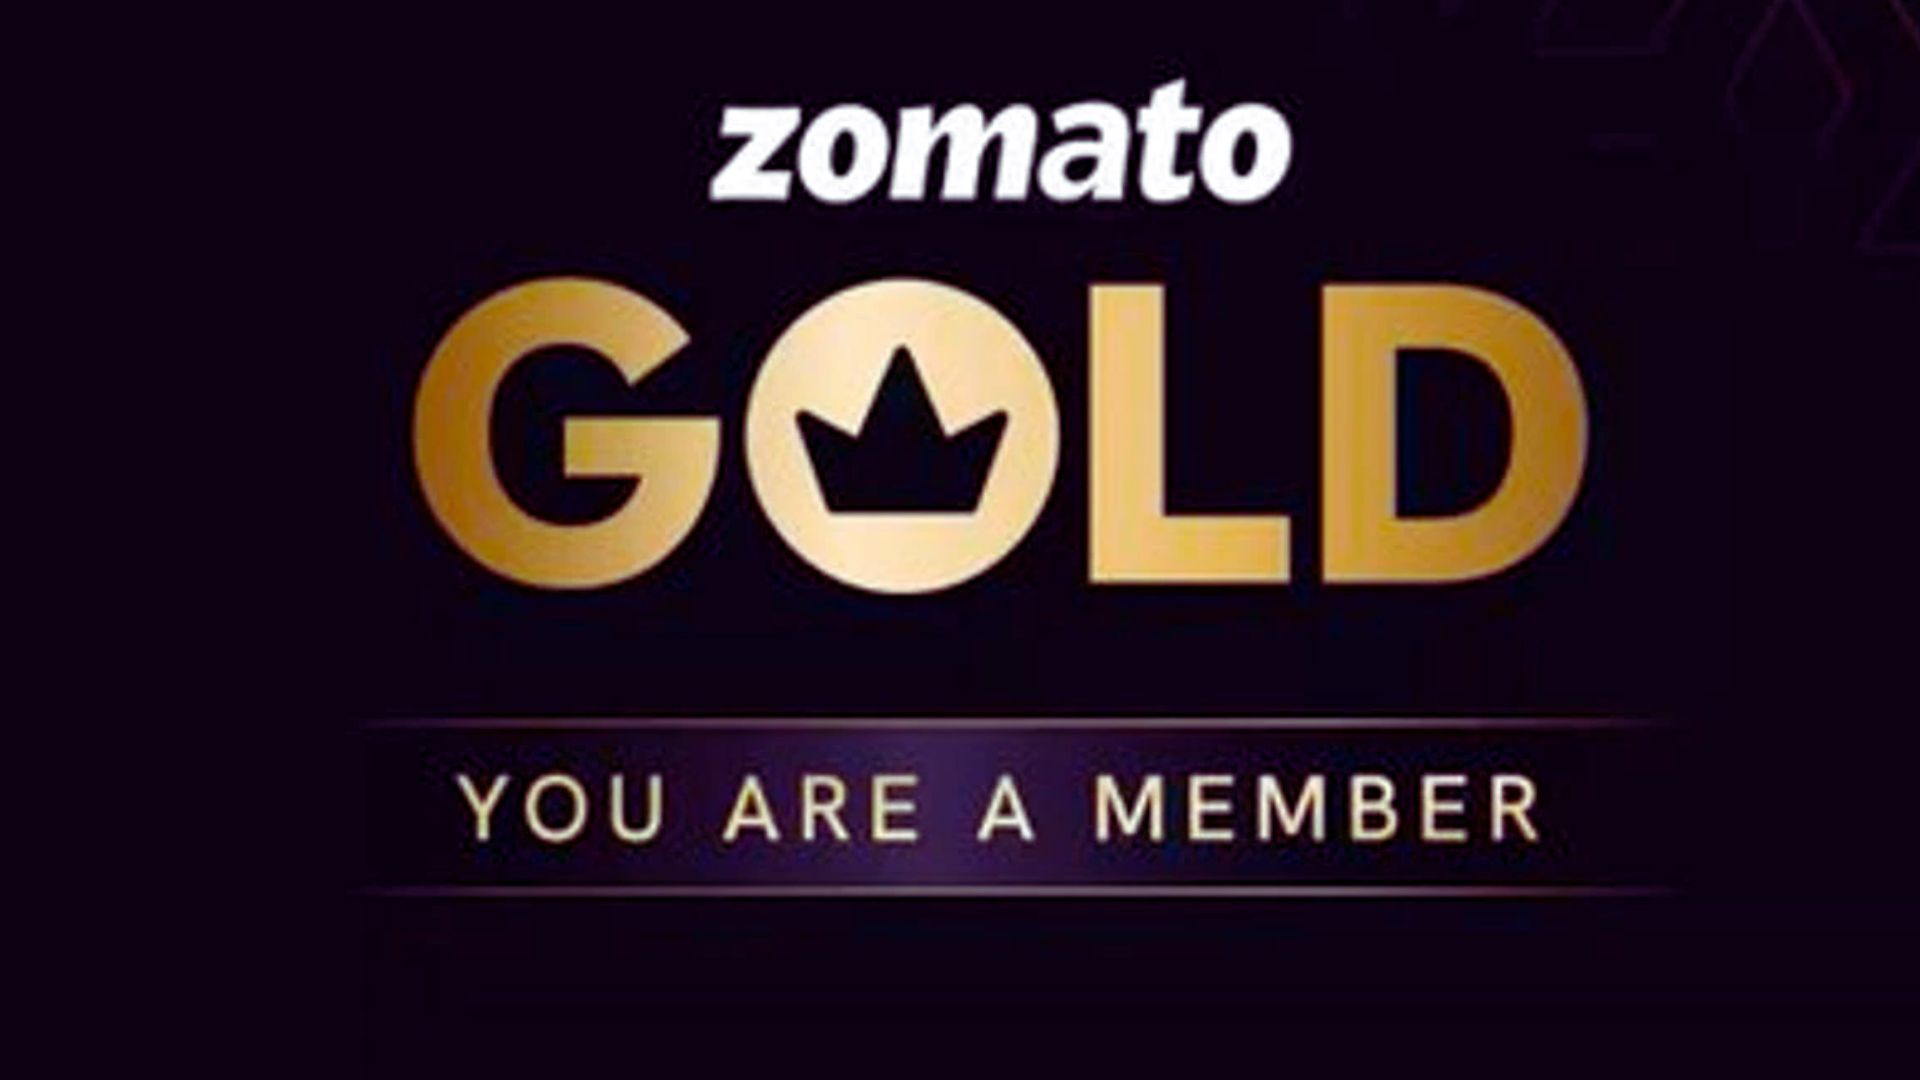 How to Get Zomato Gold Membership Free? 5 Latest Tricks